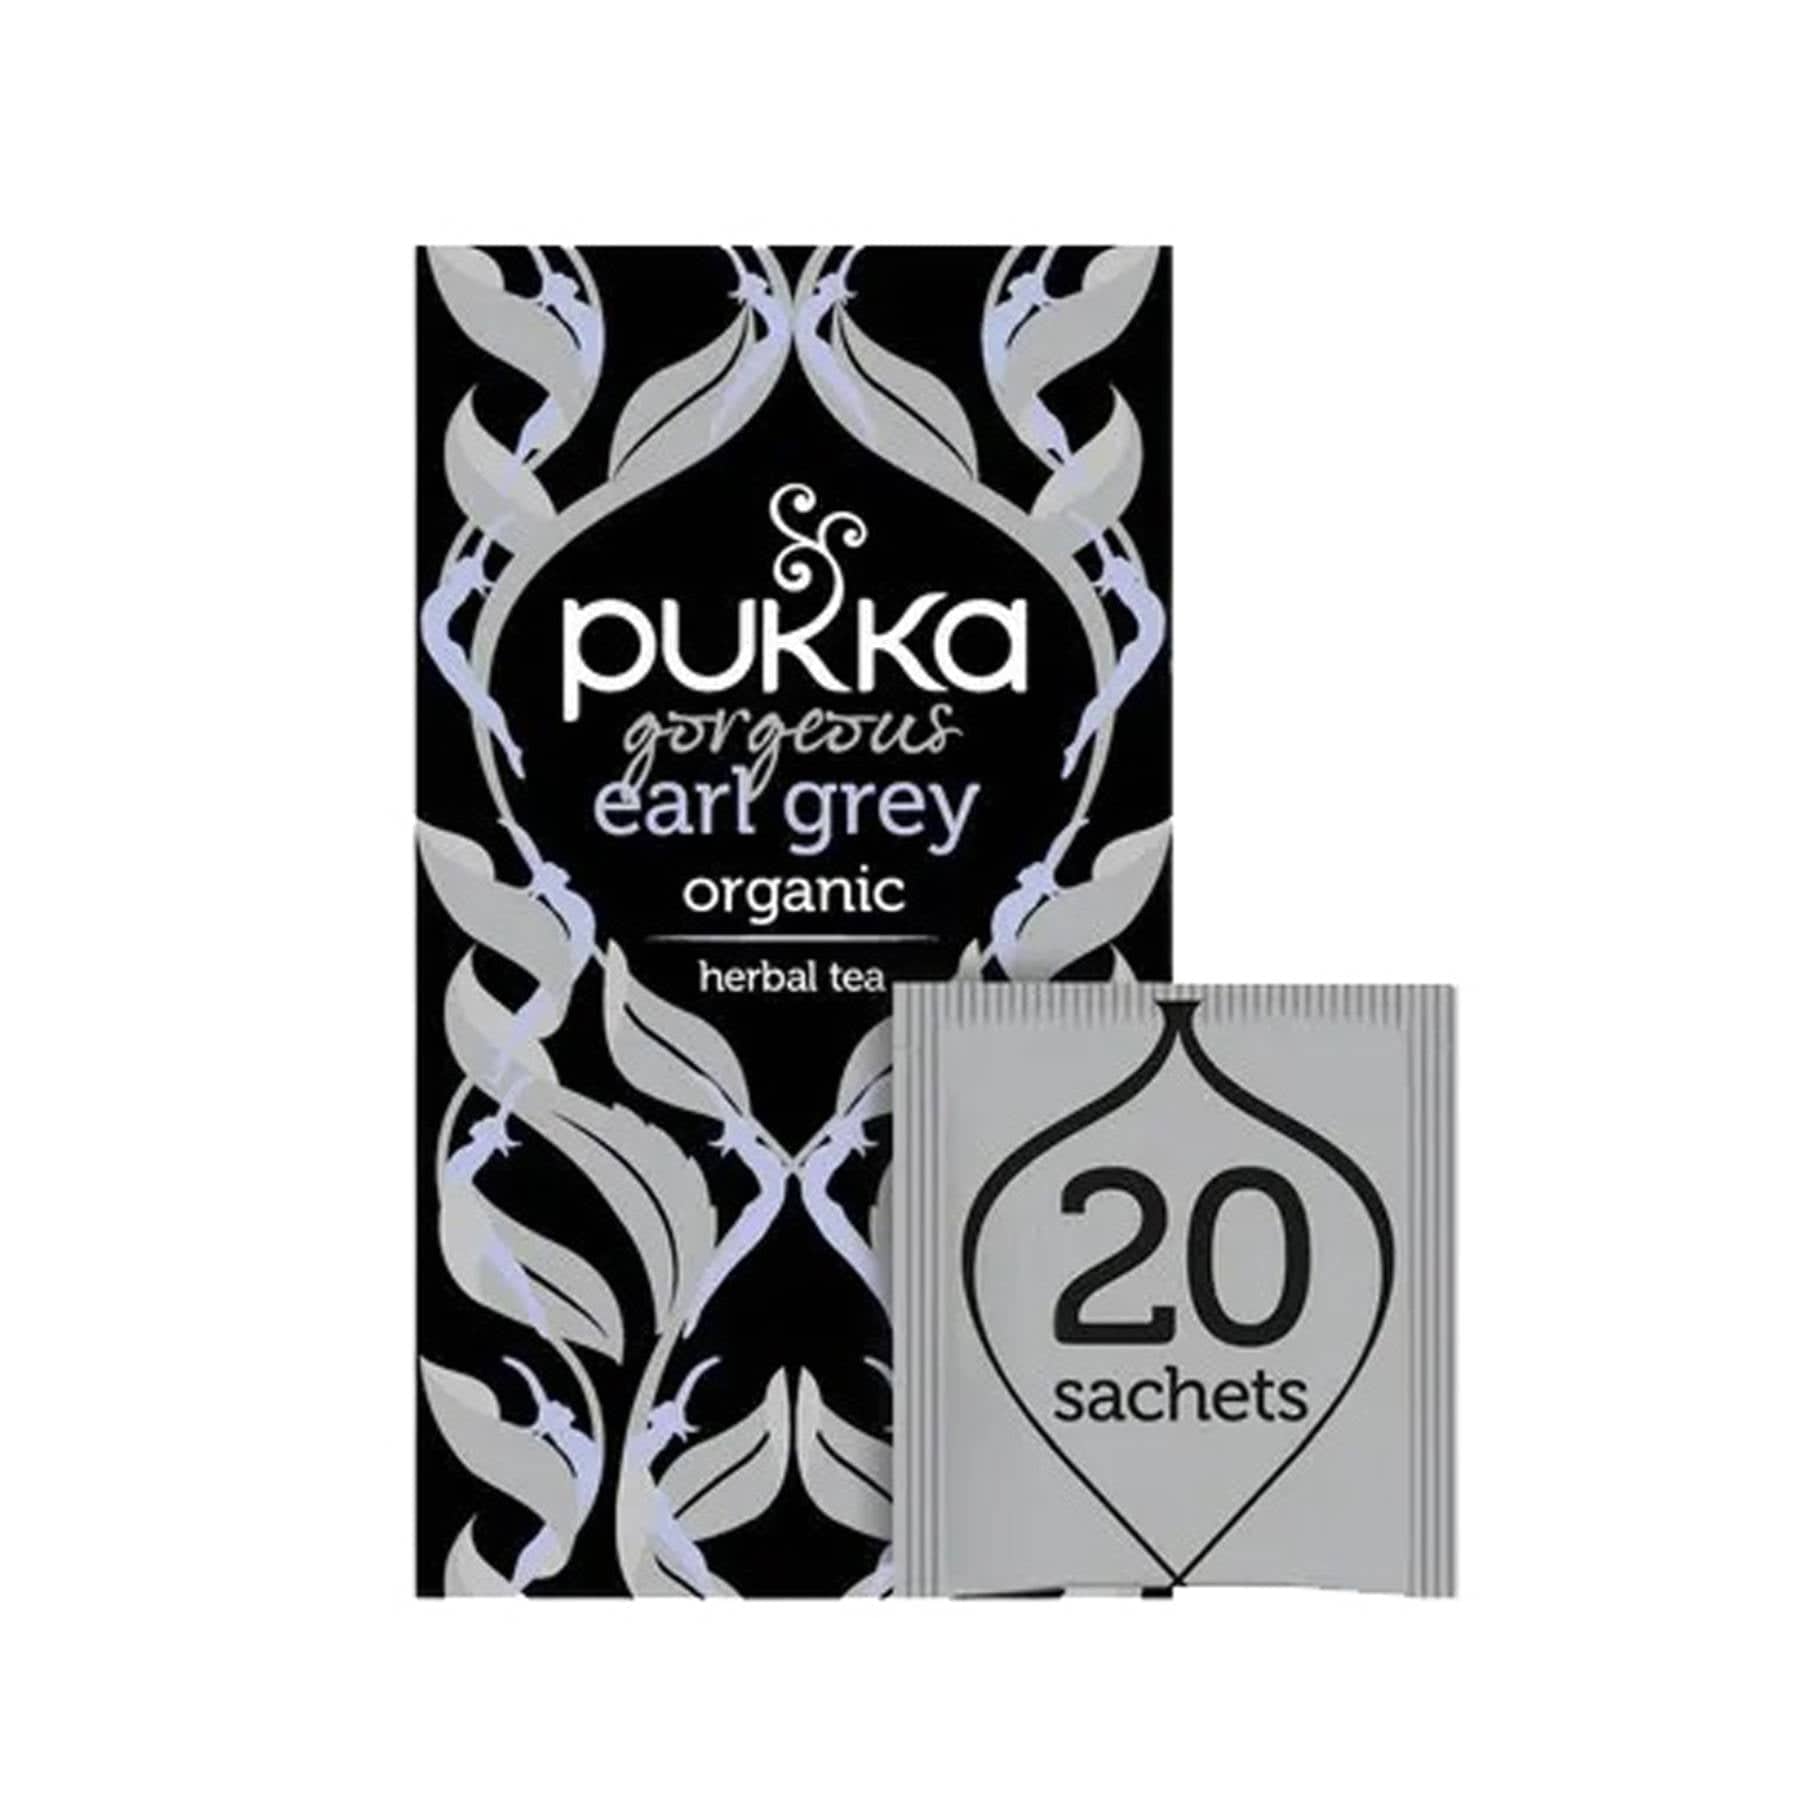 Gorgeous earl grey tea 20 tea bags